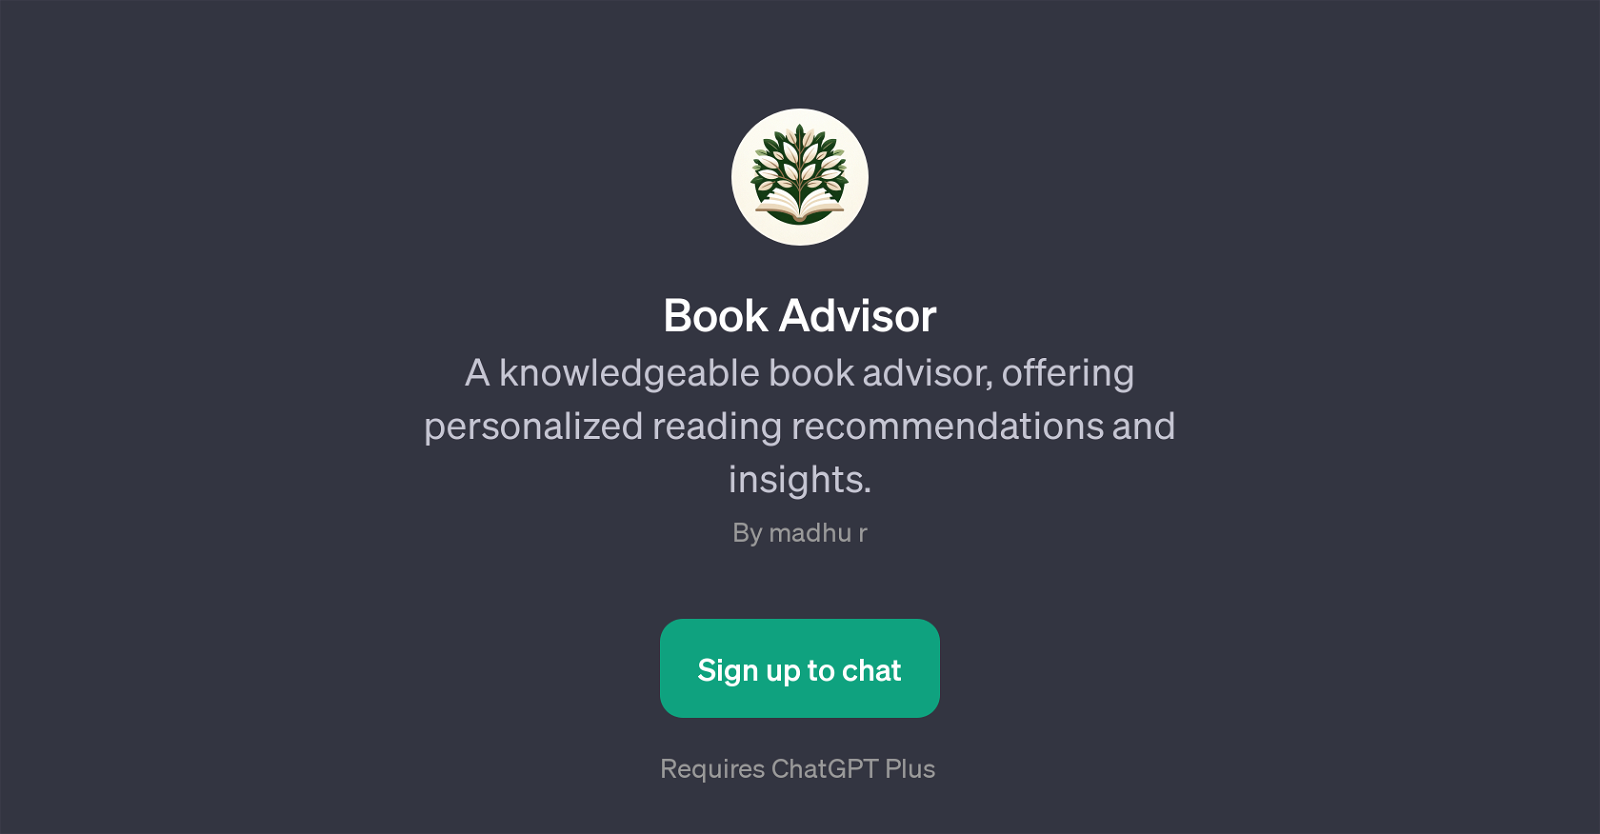 Book Advisor website